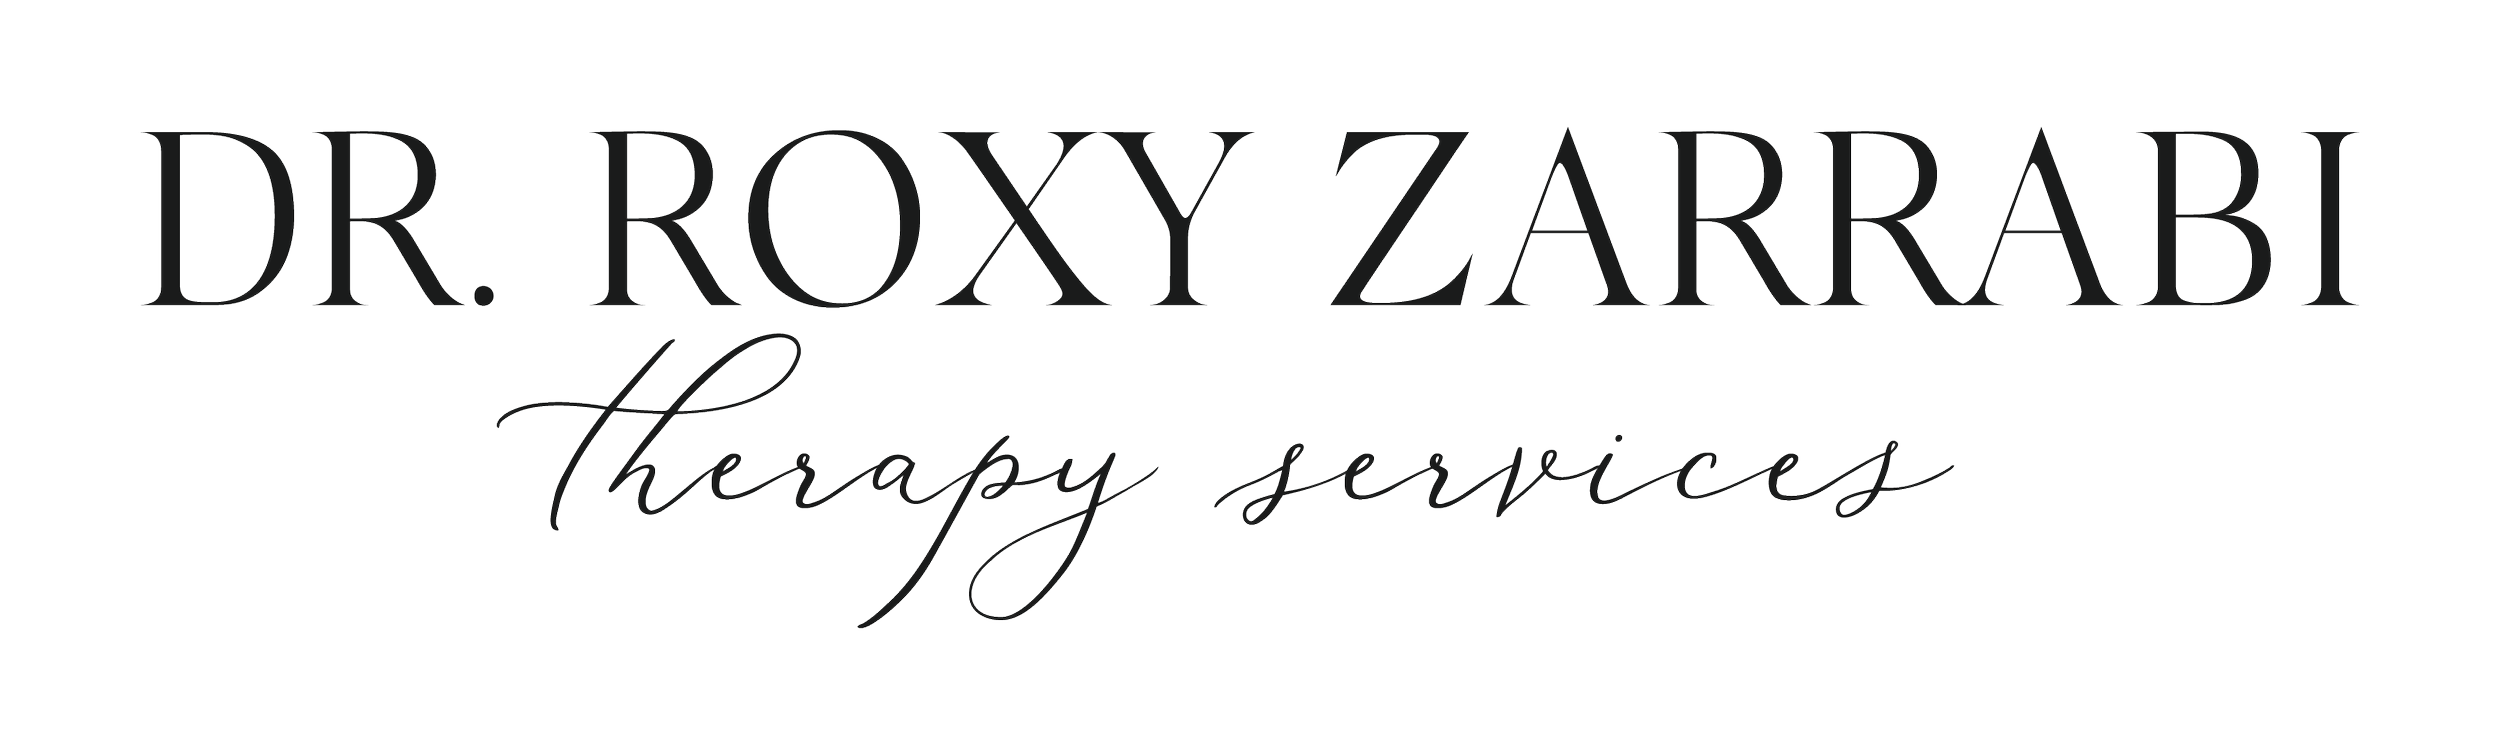 Dr. Roxy Zarrabi - Therapy Services